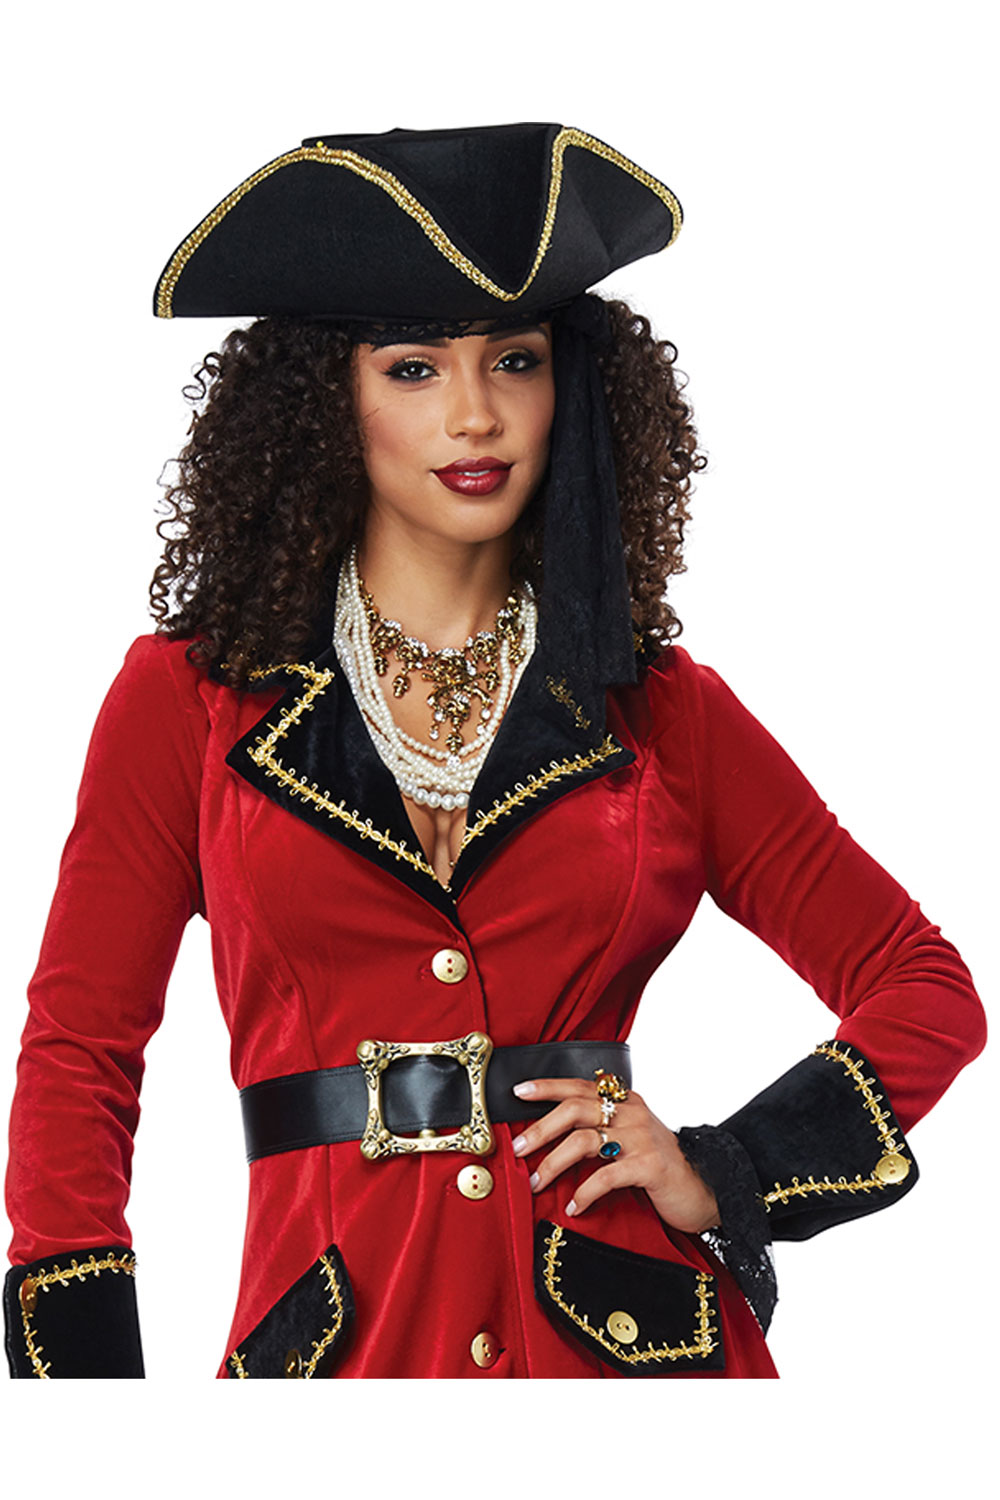 High Seven Seas Heroine Captain Halloween Pirate Costume Adult Women 01429 